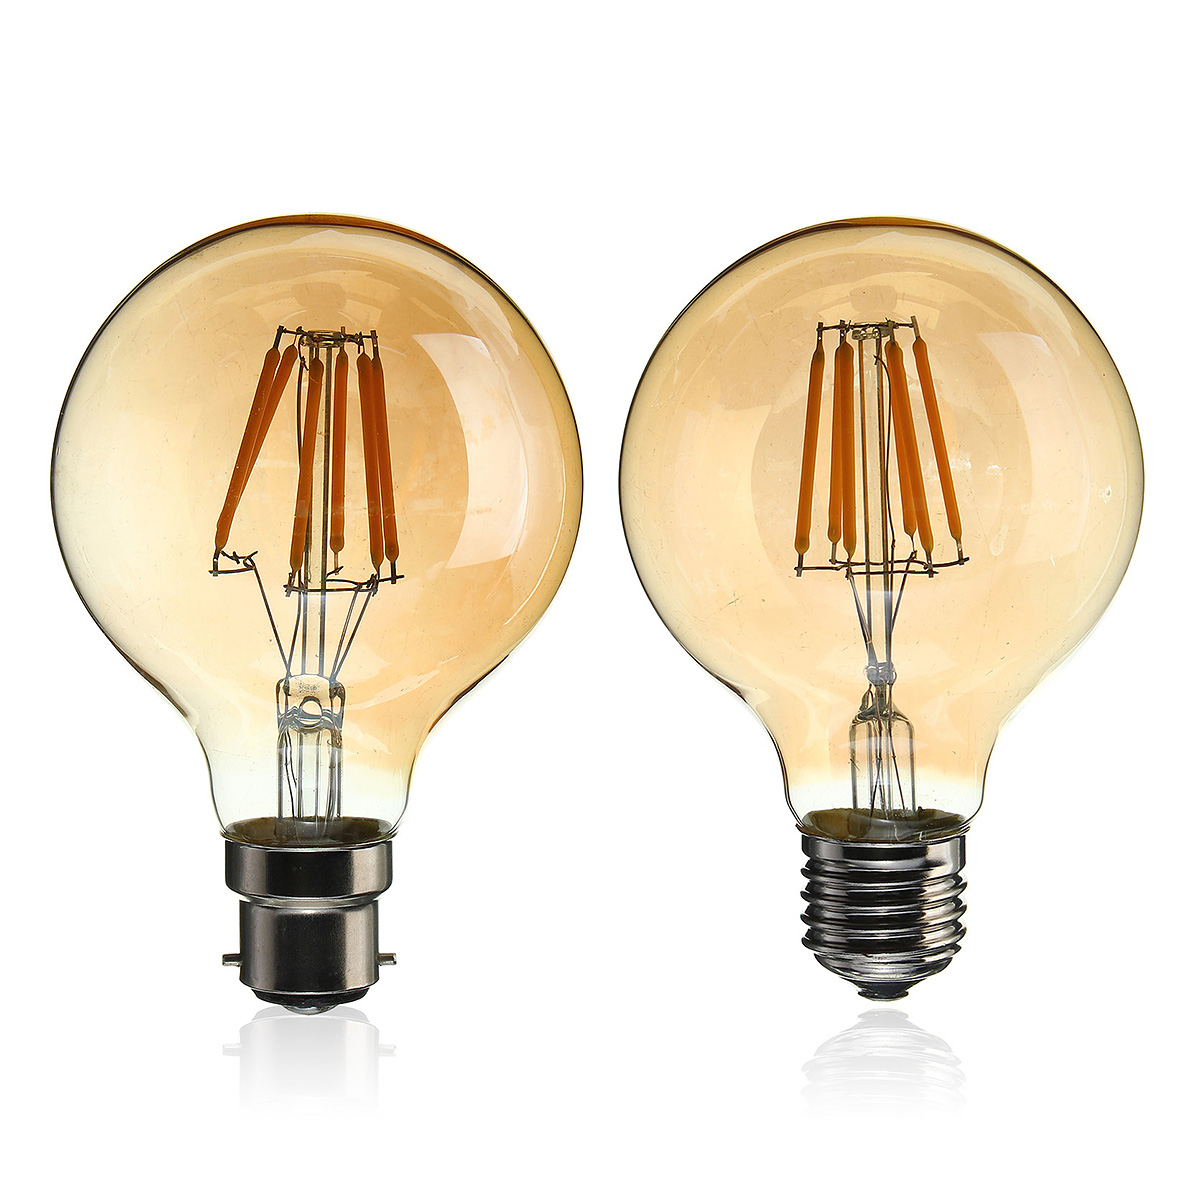 B22E27-Dimmable-G80-LED-6W-Vintage-Globe-Cage-Edison-Filament-Light-Bulb-Lamp-AC220V-1118236